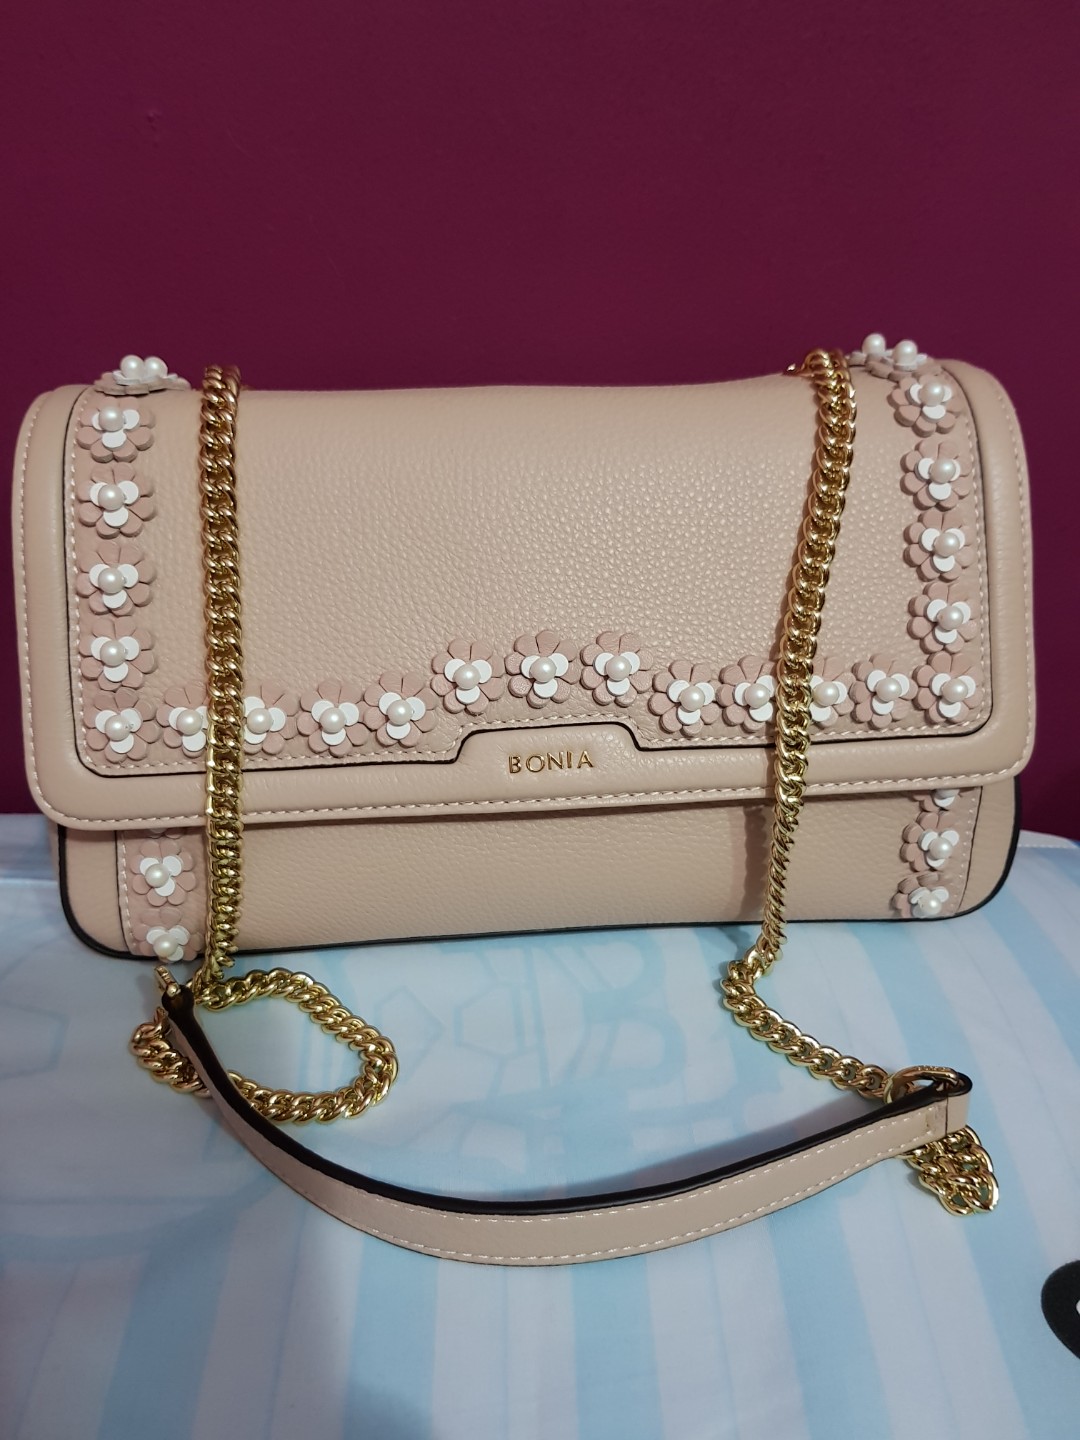 Authentic Bonia handbag New arrival collection, Women's Fashion, Bags ...